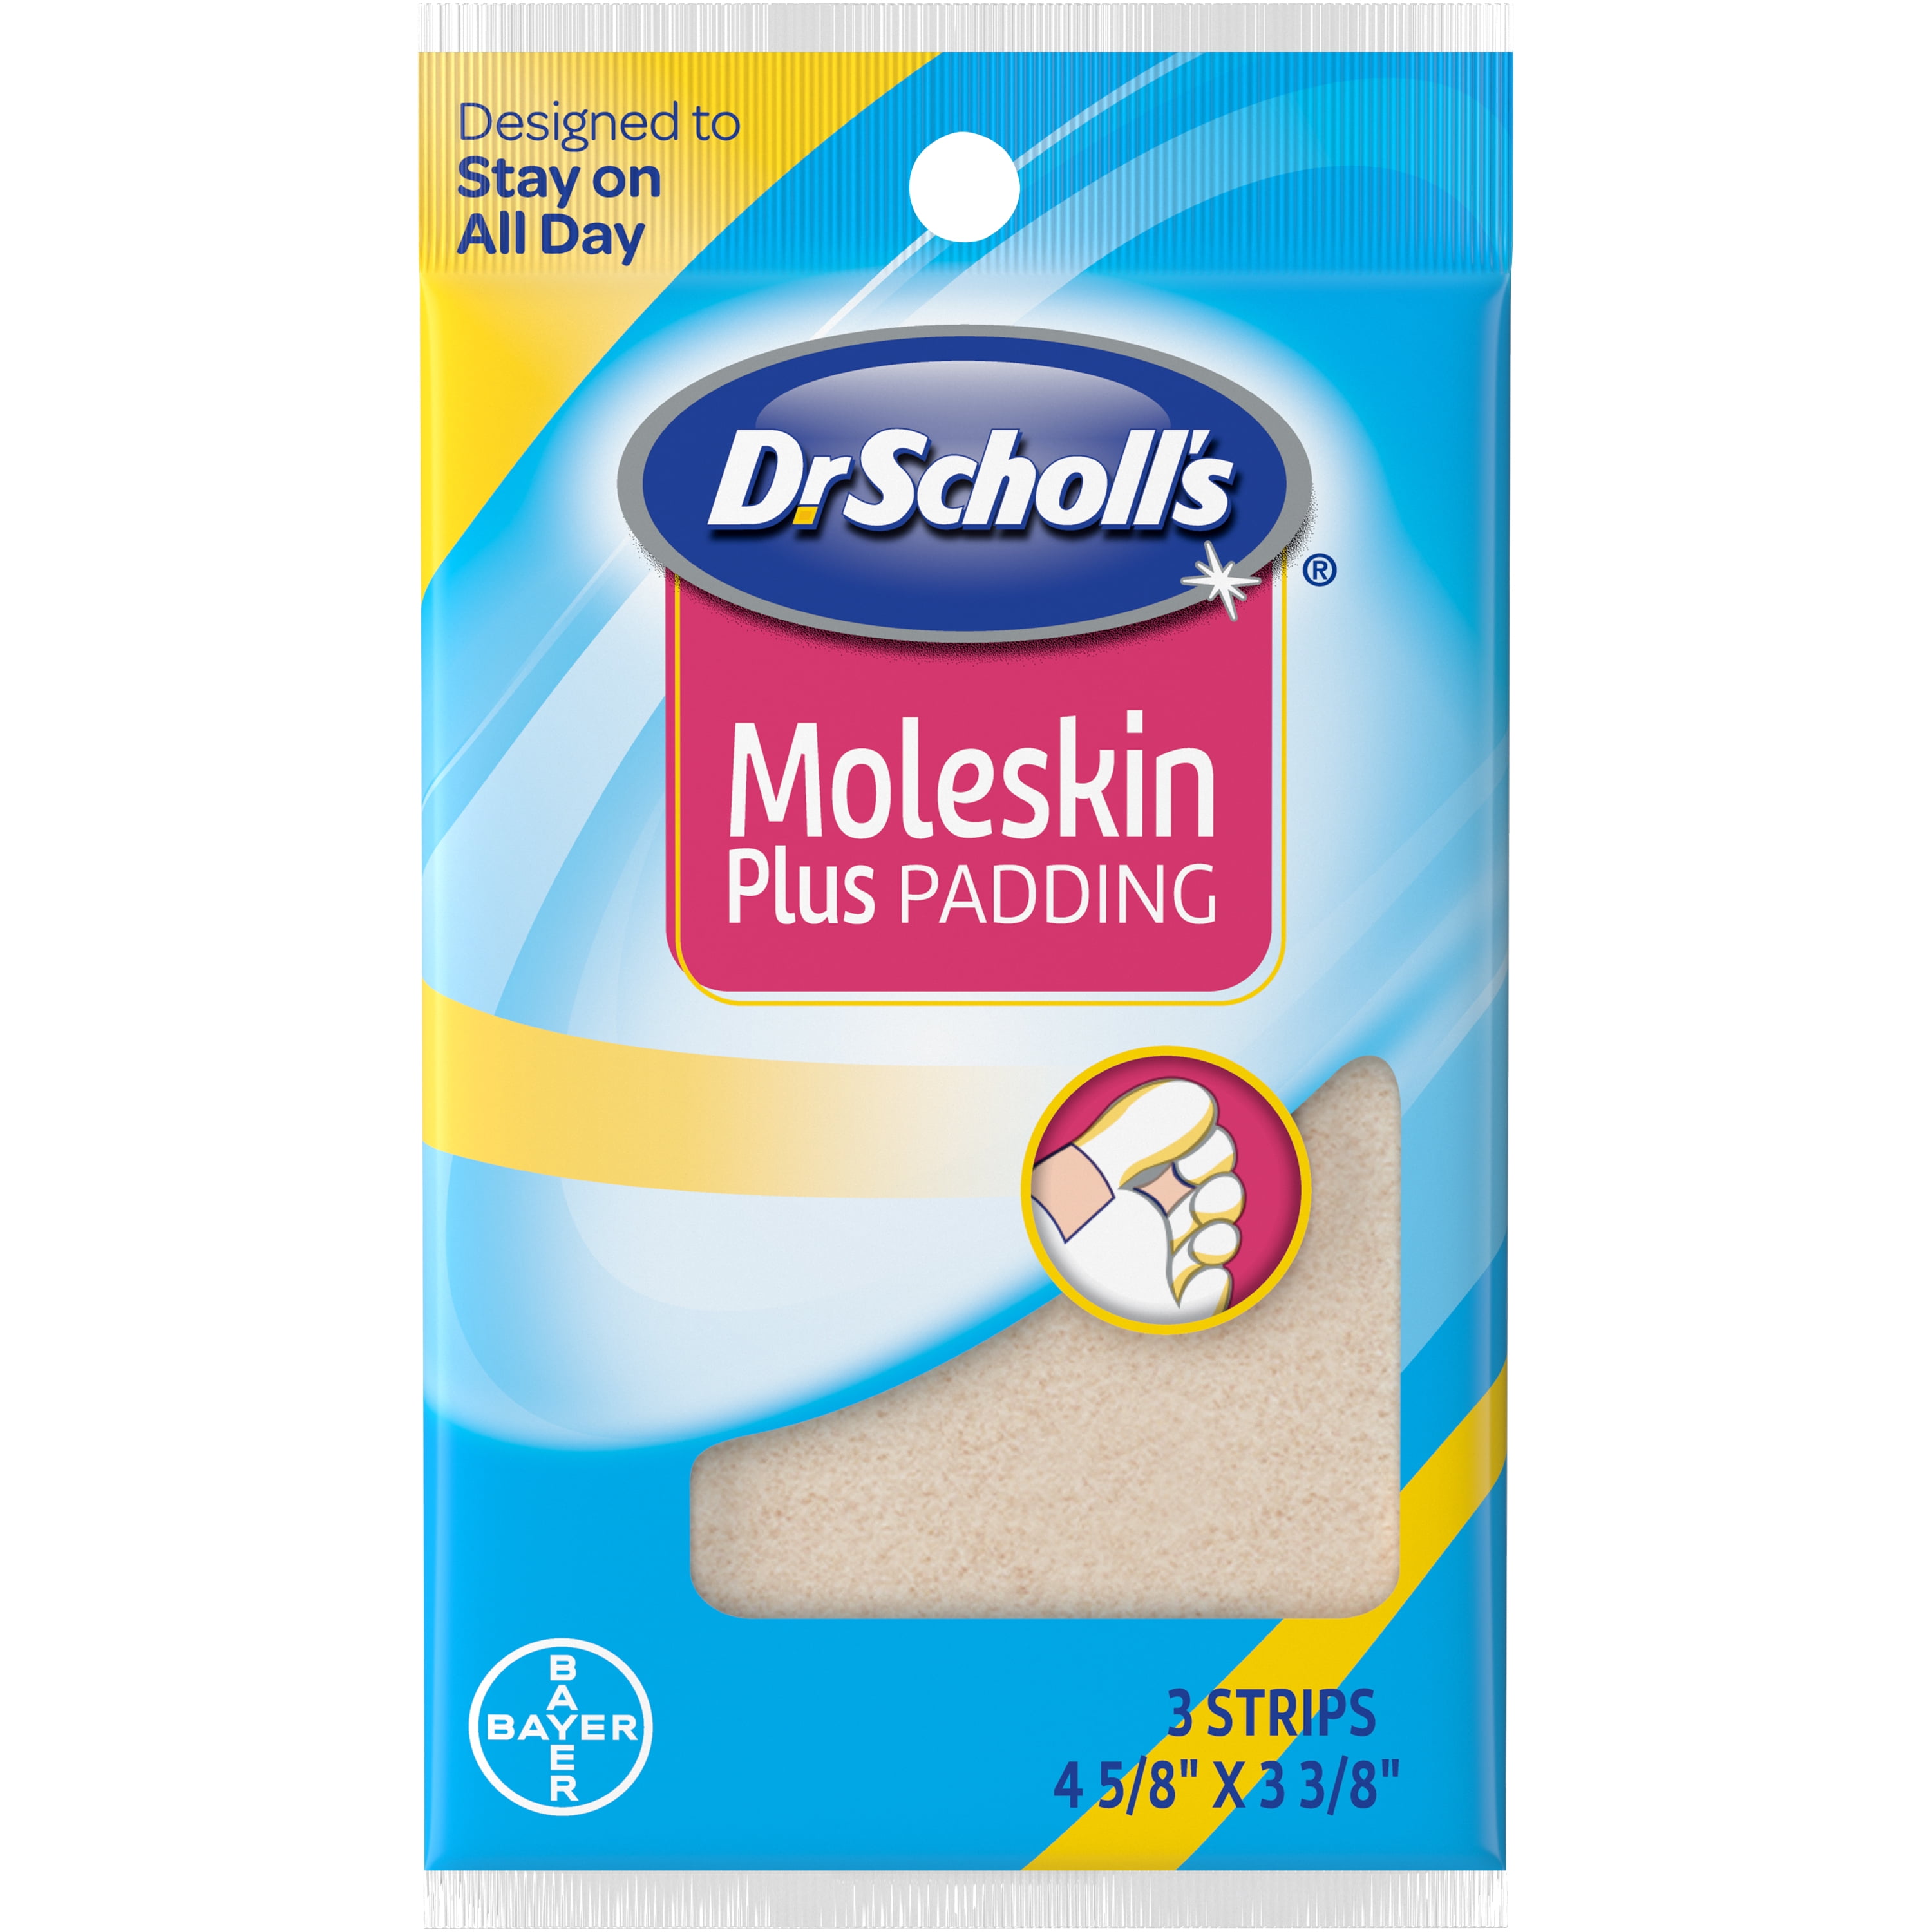 Dr. Scholl's Moleskin Plus Padding for 